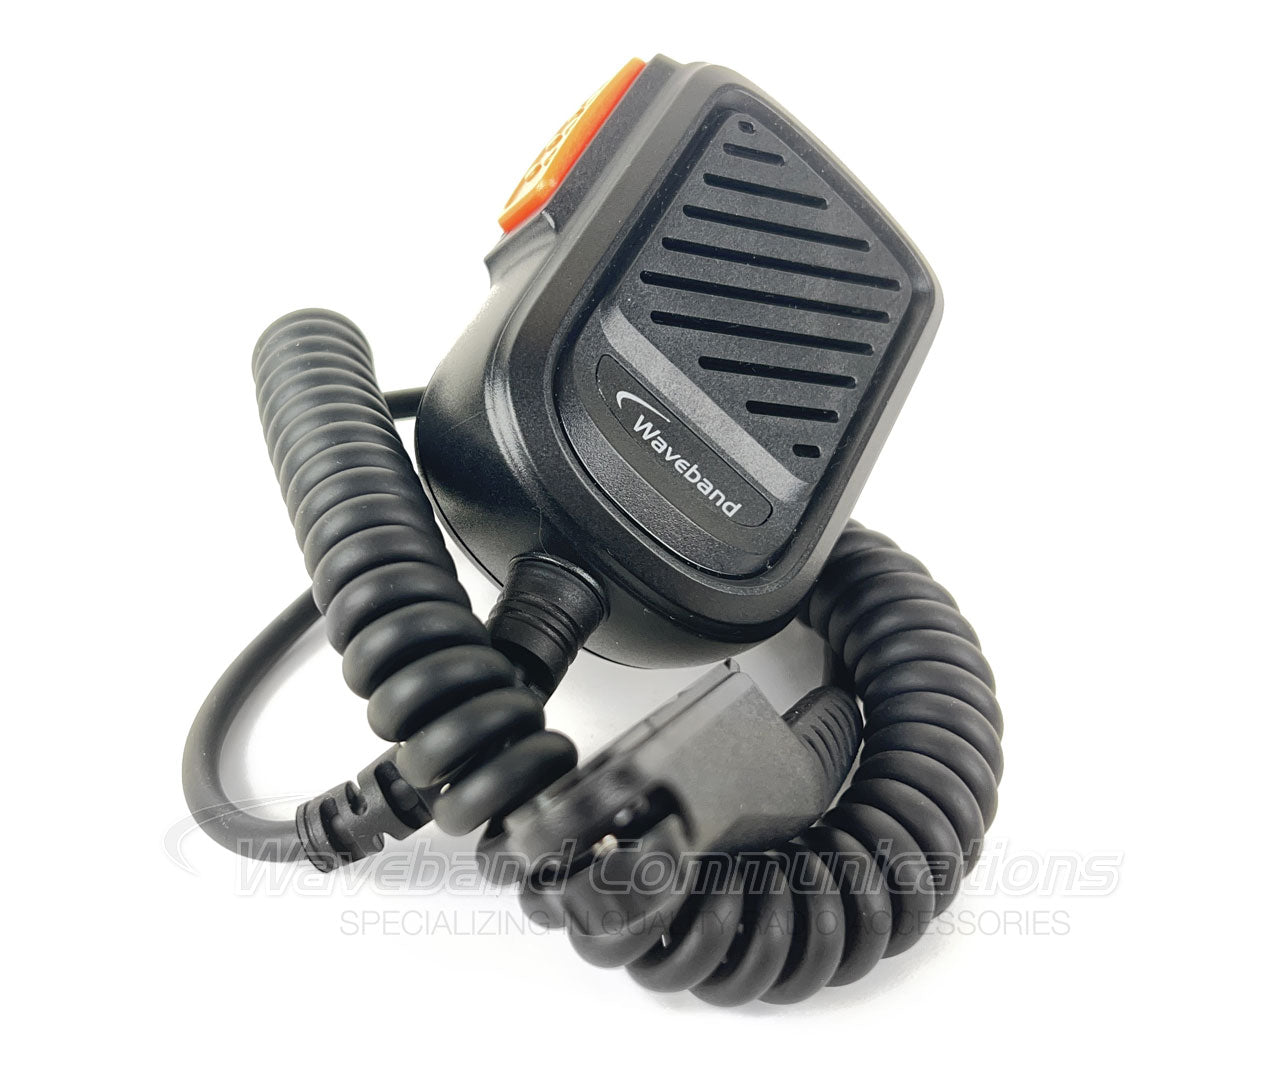 Motorola PMMN4140 Compatibele zware luidsprekermicrofoon voor gebruik met Motorola R7 -serie handheld radio's